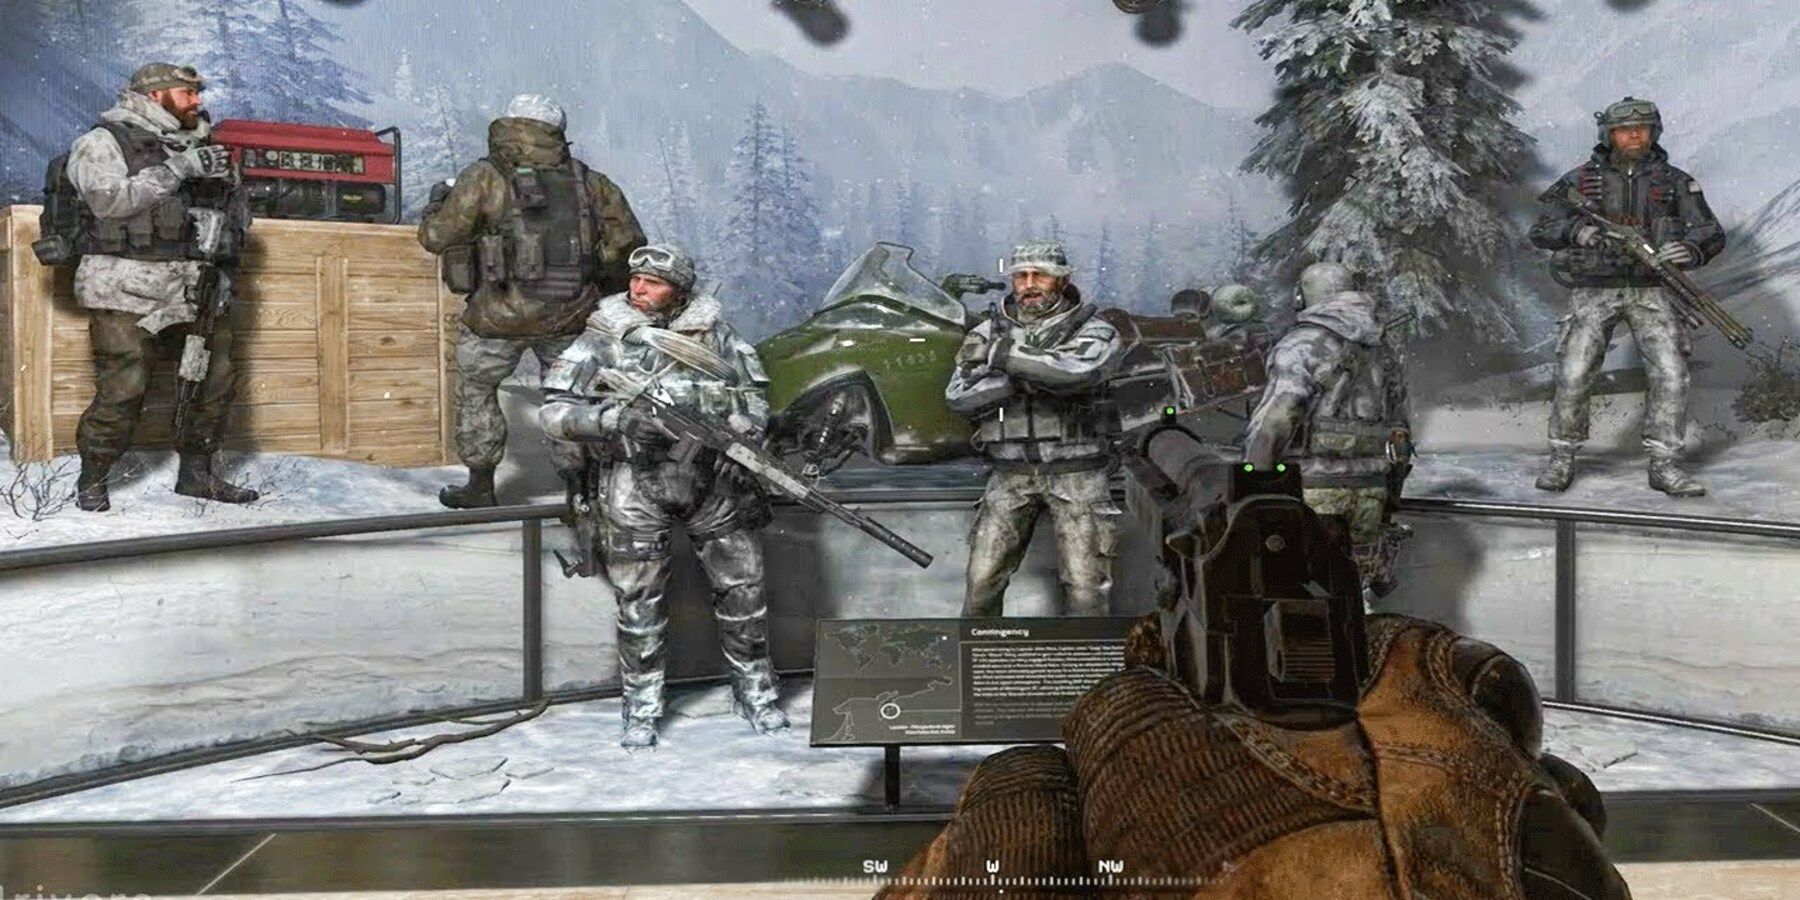 Rumor: Modern Warfare 2 (2022) Campaign Will Include Ghost, Roach